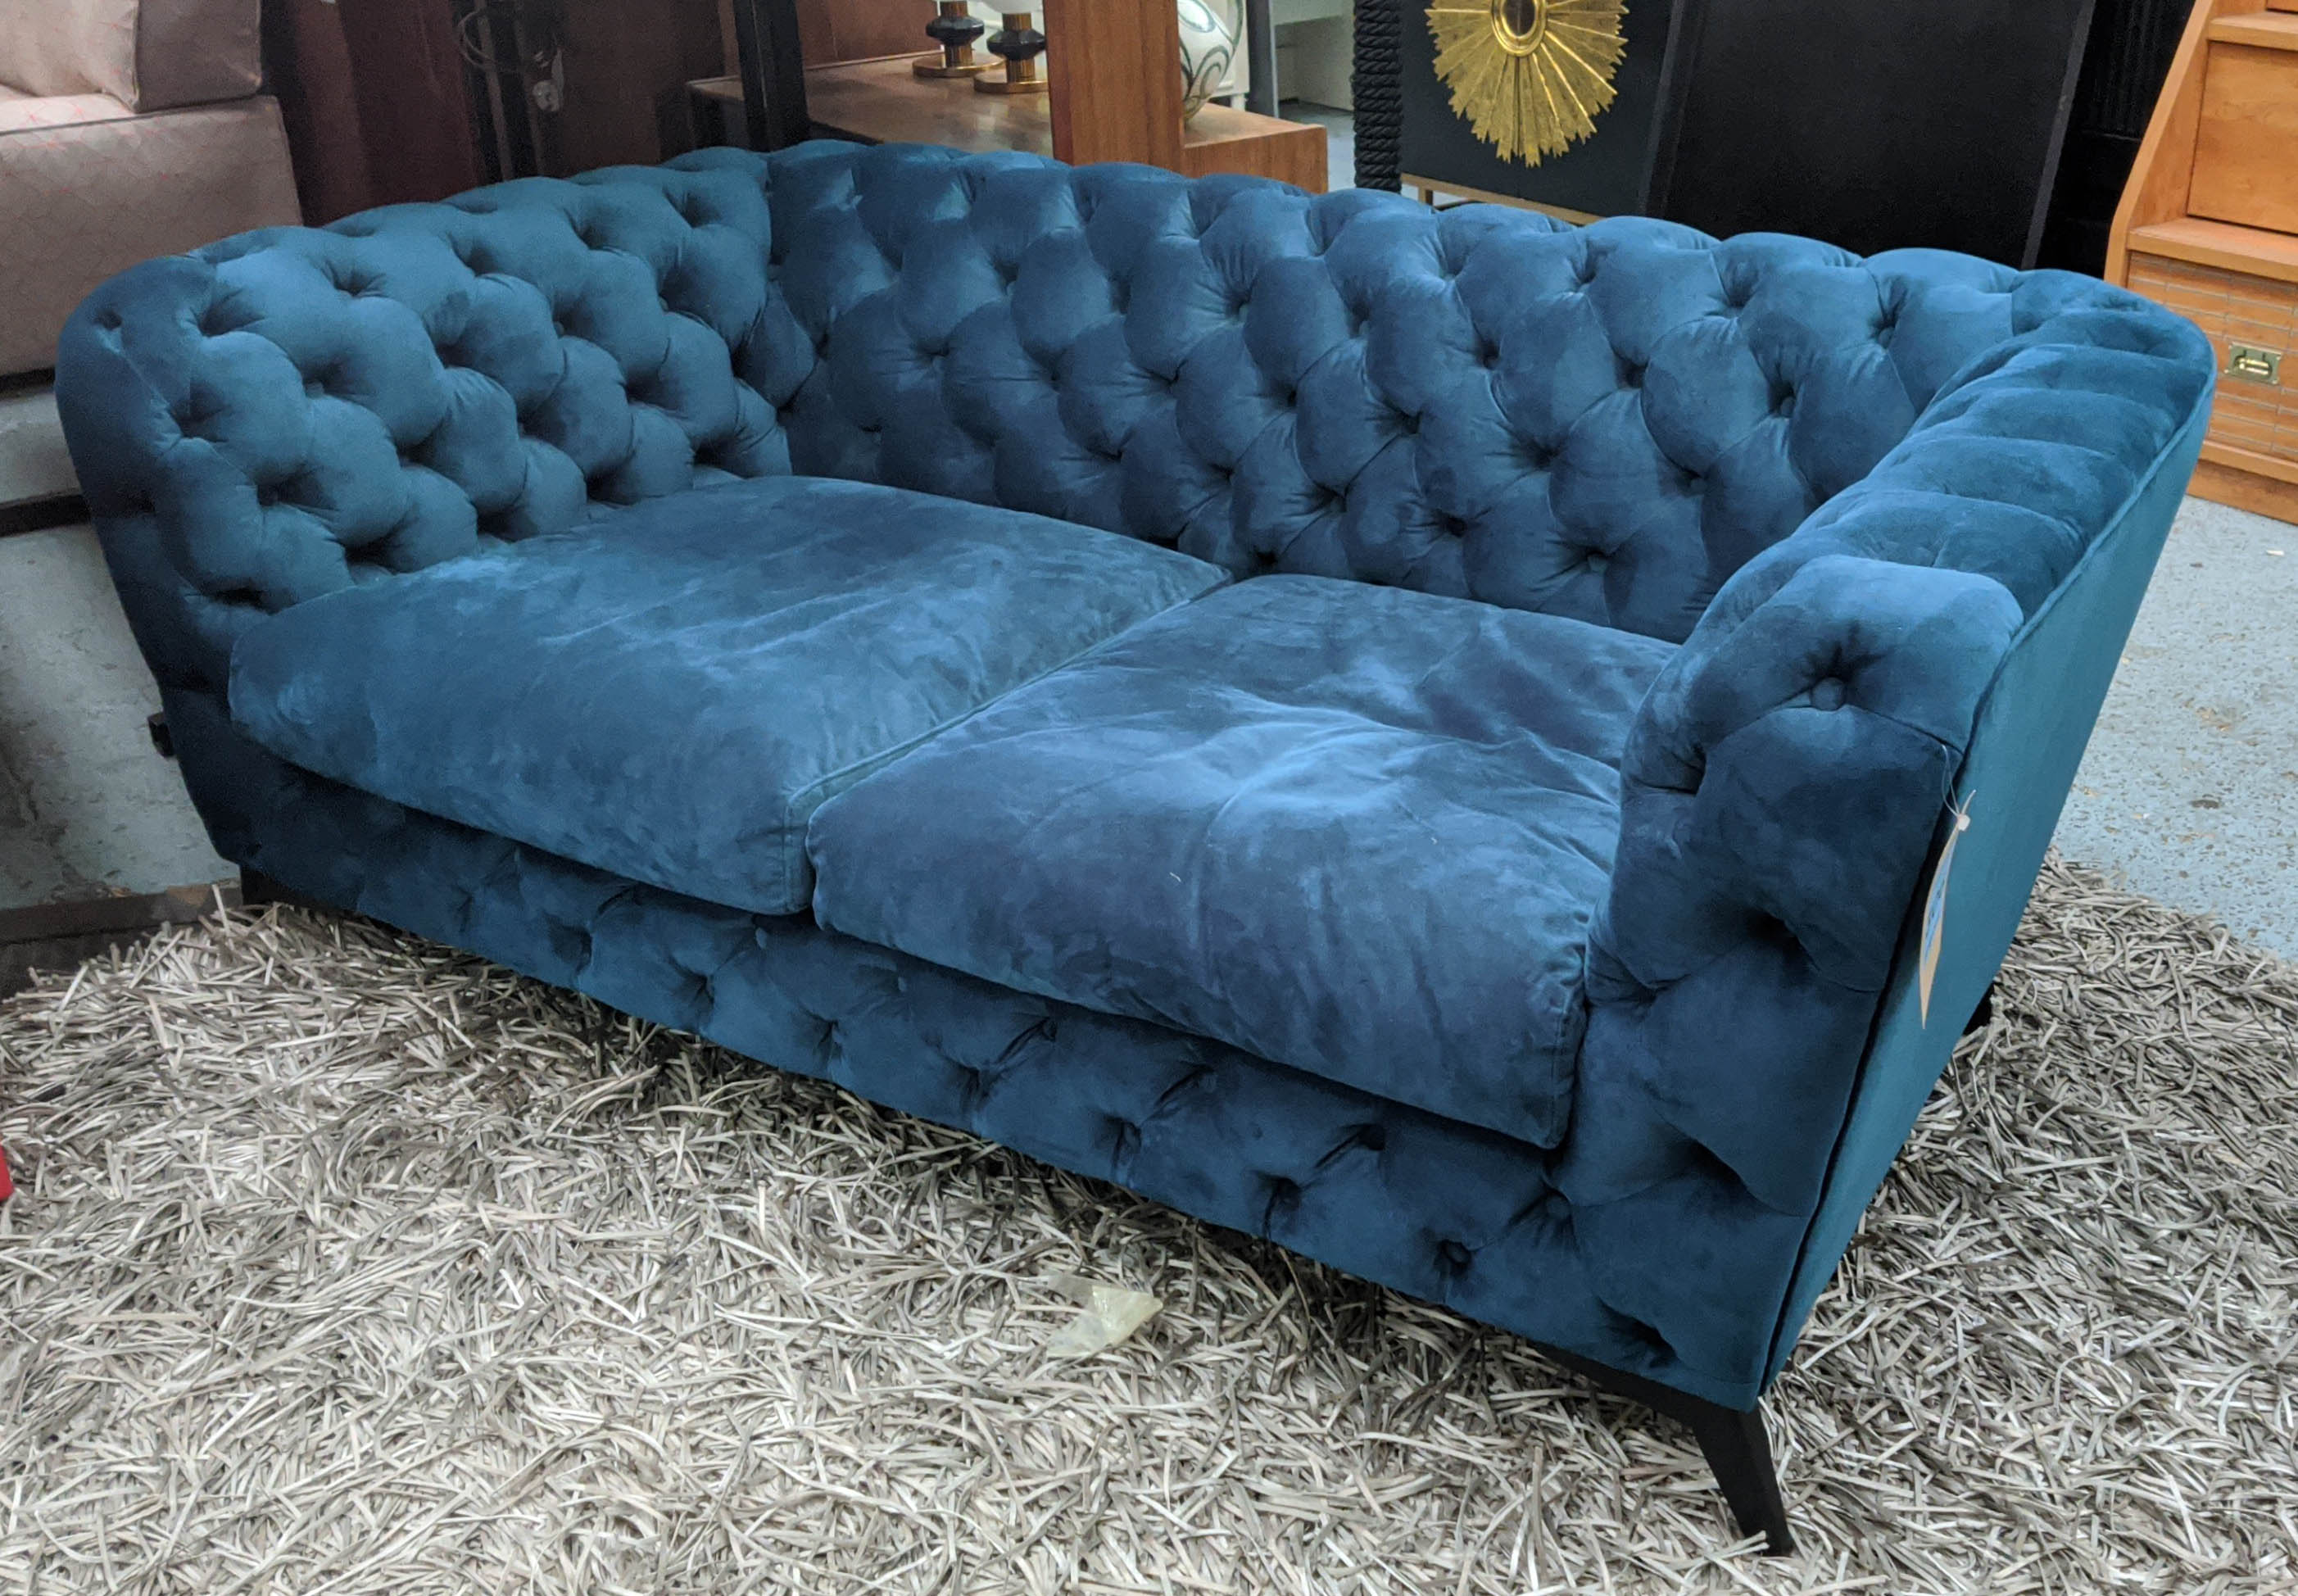 MADE.COM SLOAN SOFA, 180cm W, with sea foam blue velvet upholstery.